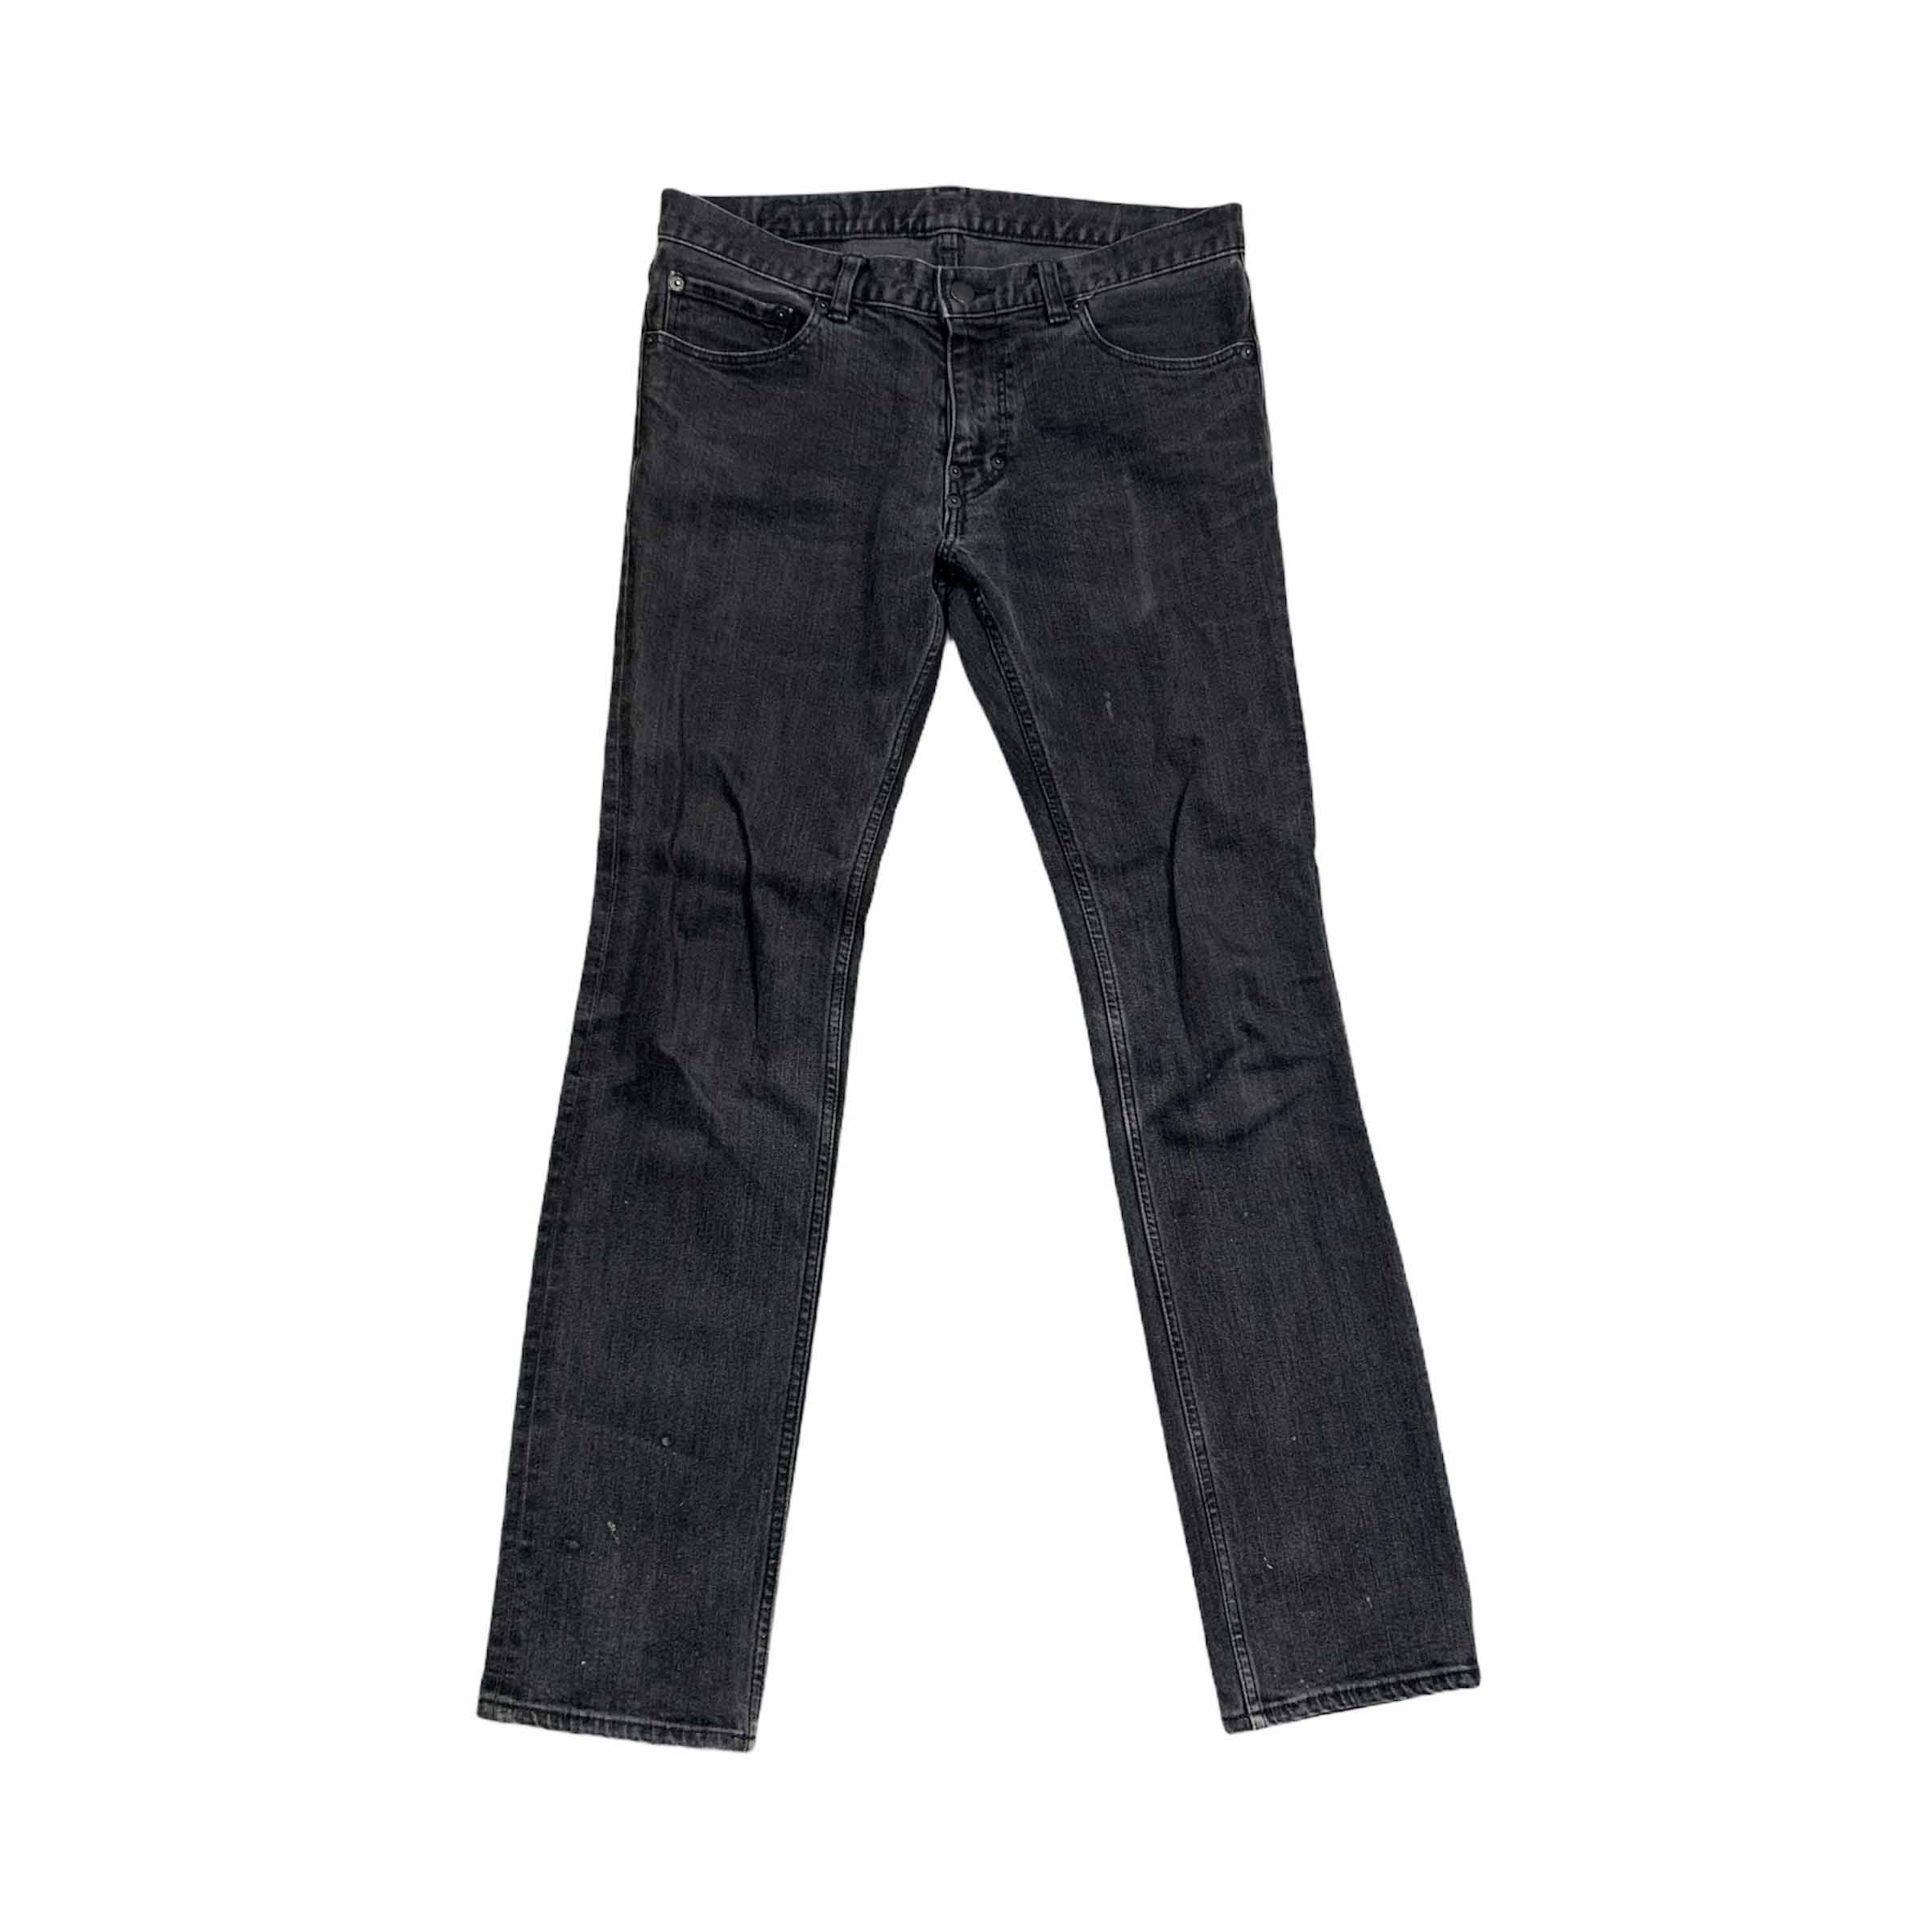 [Numbernine] Gray Jeans - Size 3